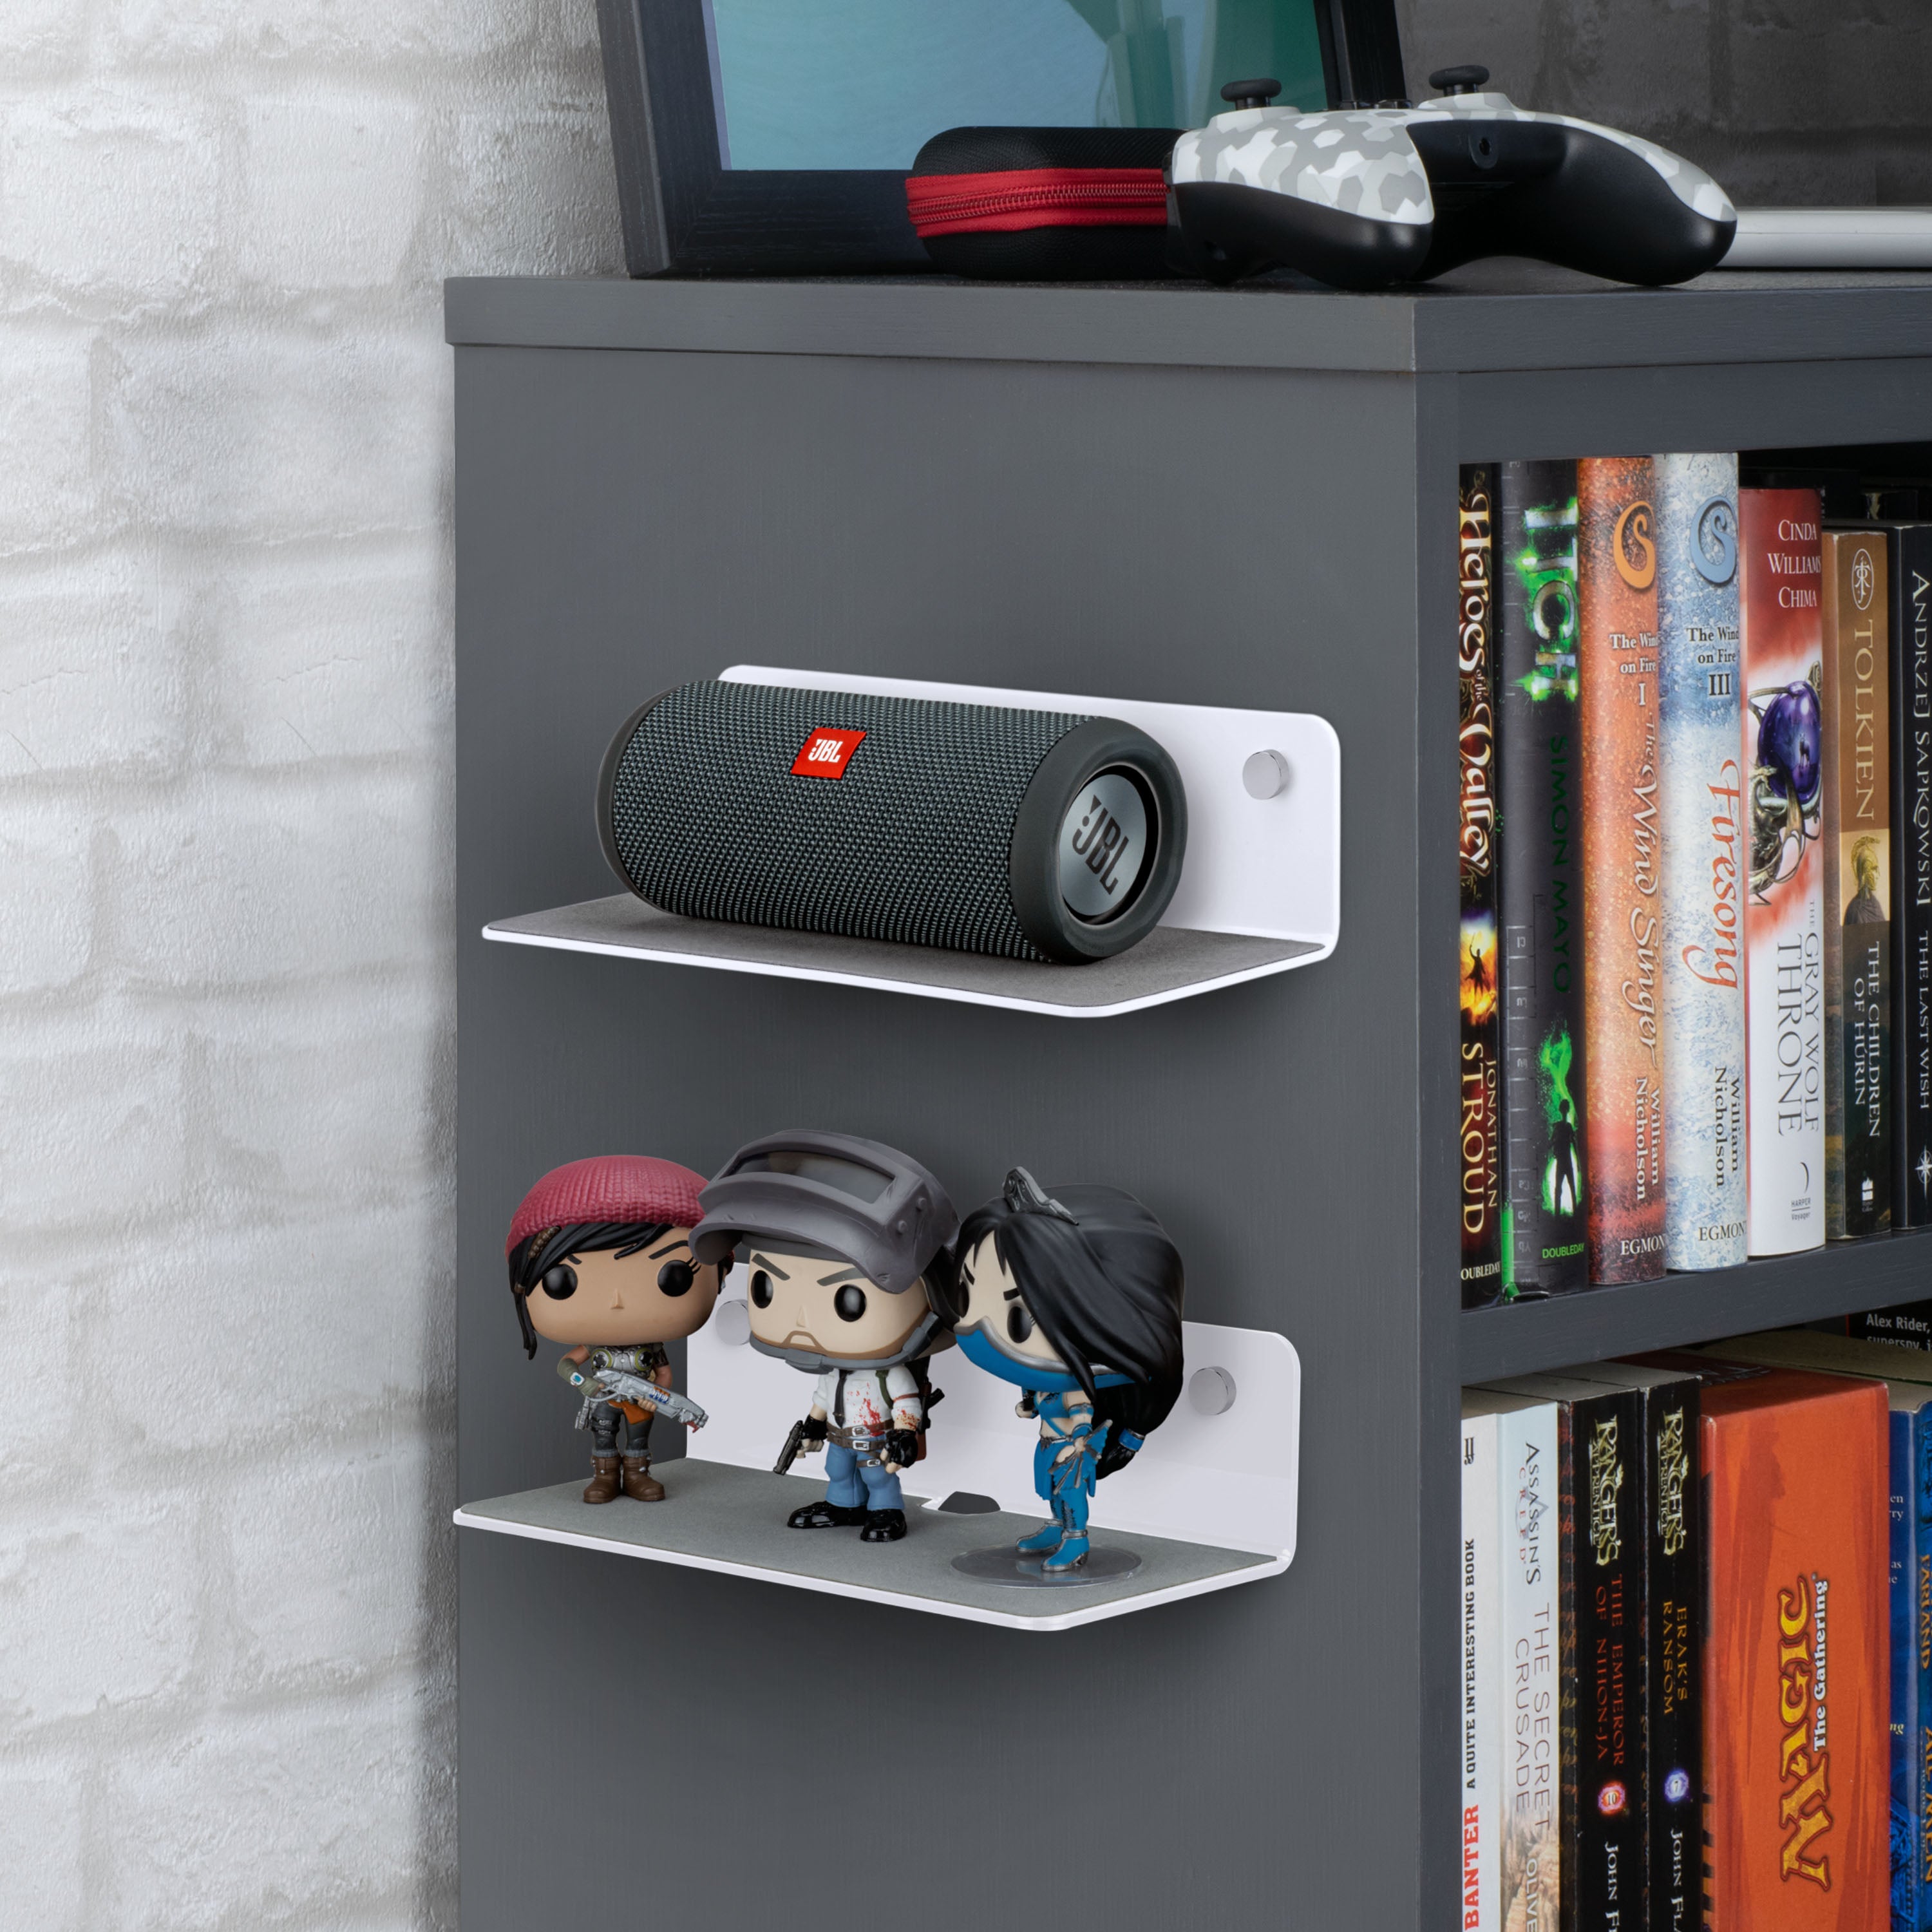 3.5” Small Floating Shelf Speaker & Camera Stand, Self Adhesive